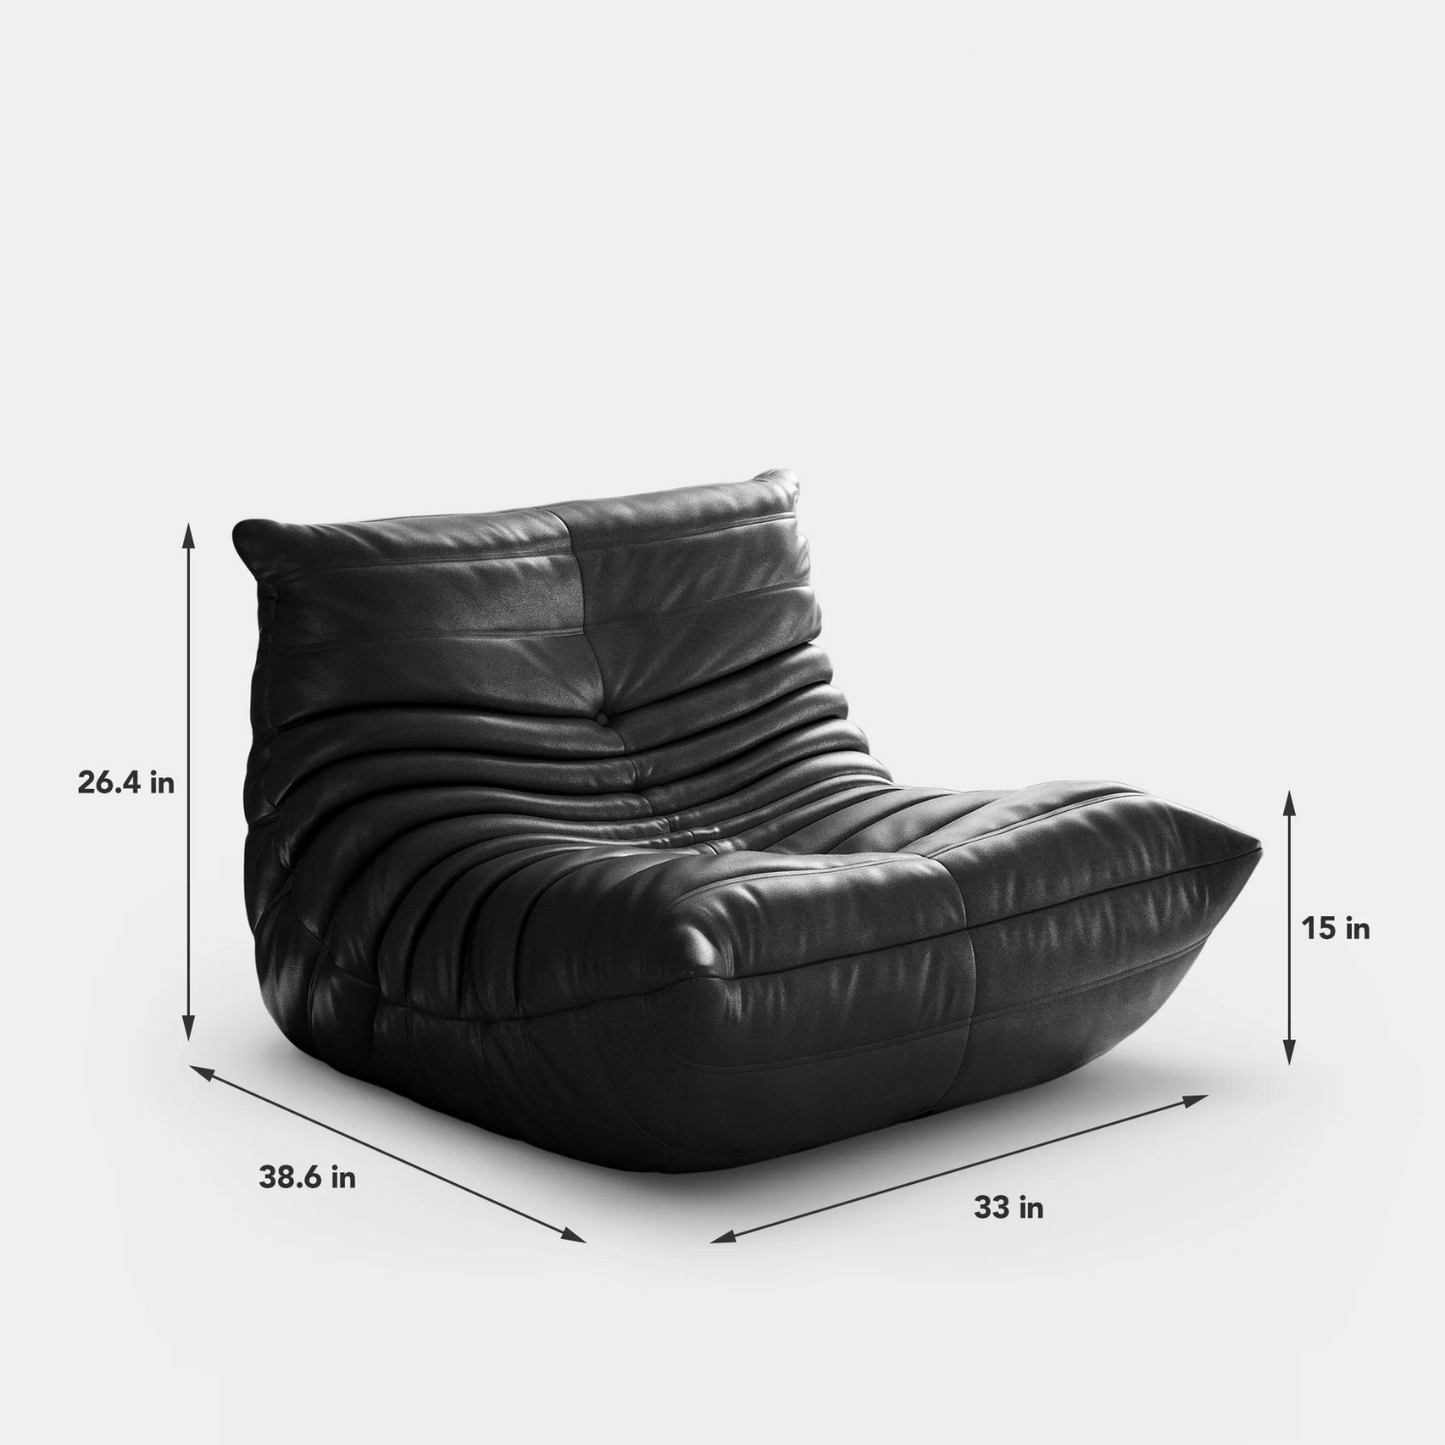 ArtZ® Nordic Design Microfiber Chair